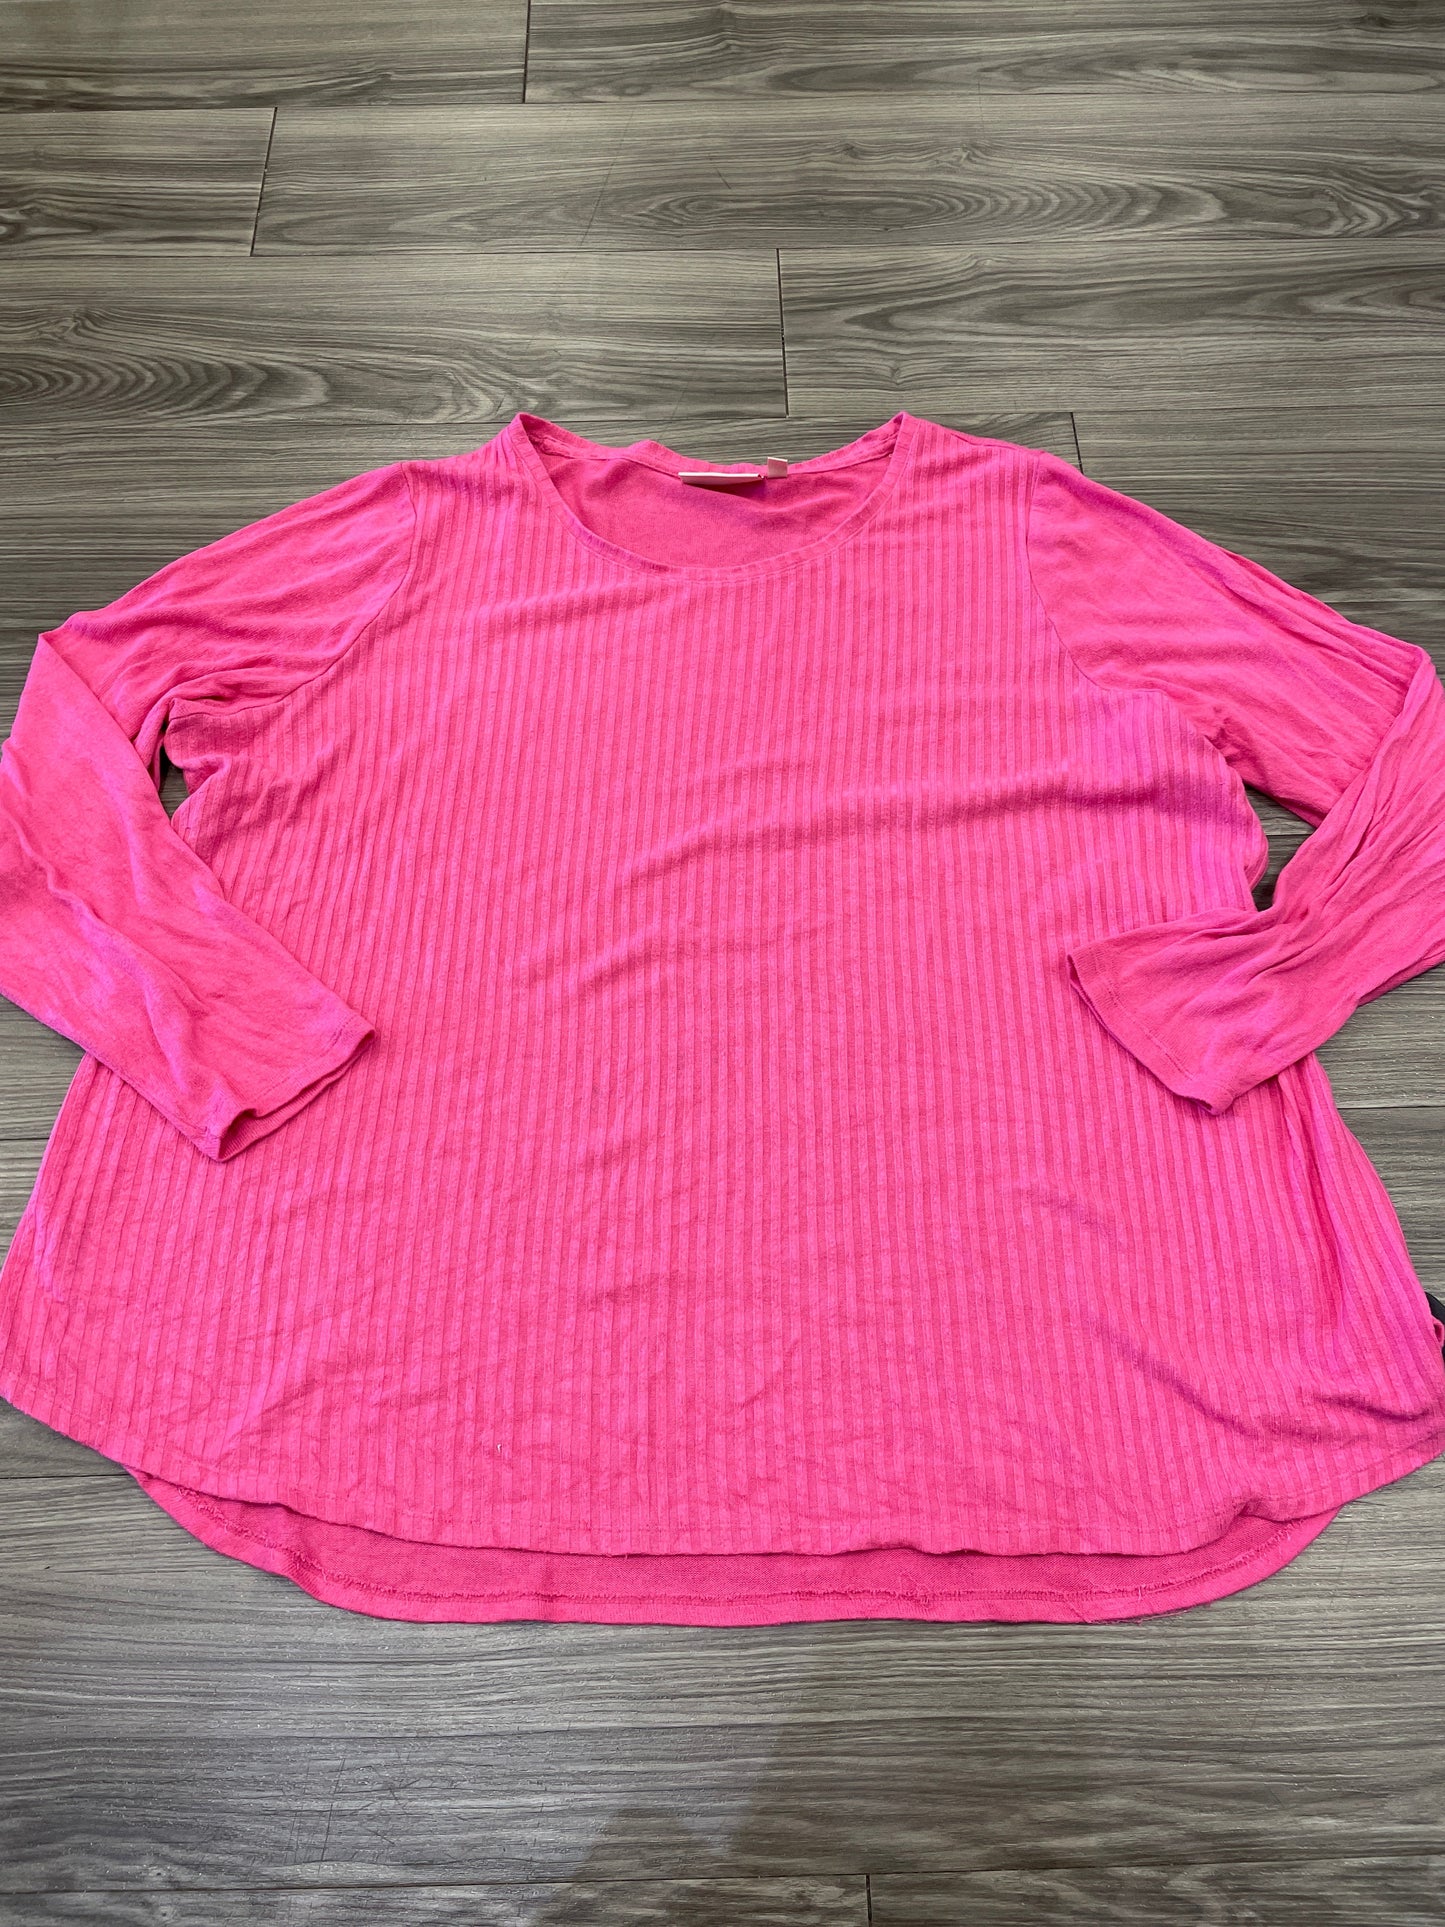 Pink Top Long Sleeve Evri, Size 3x